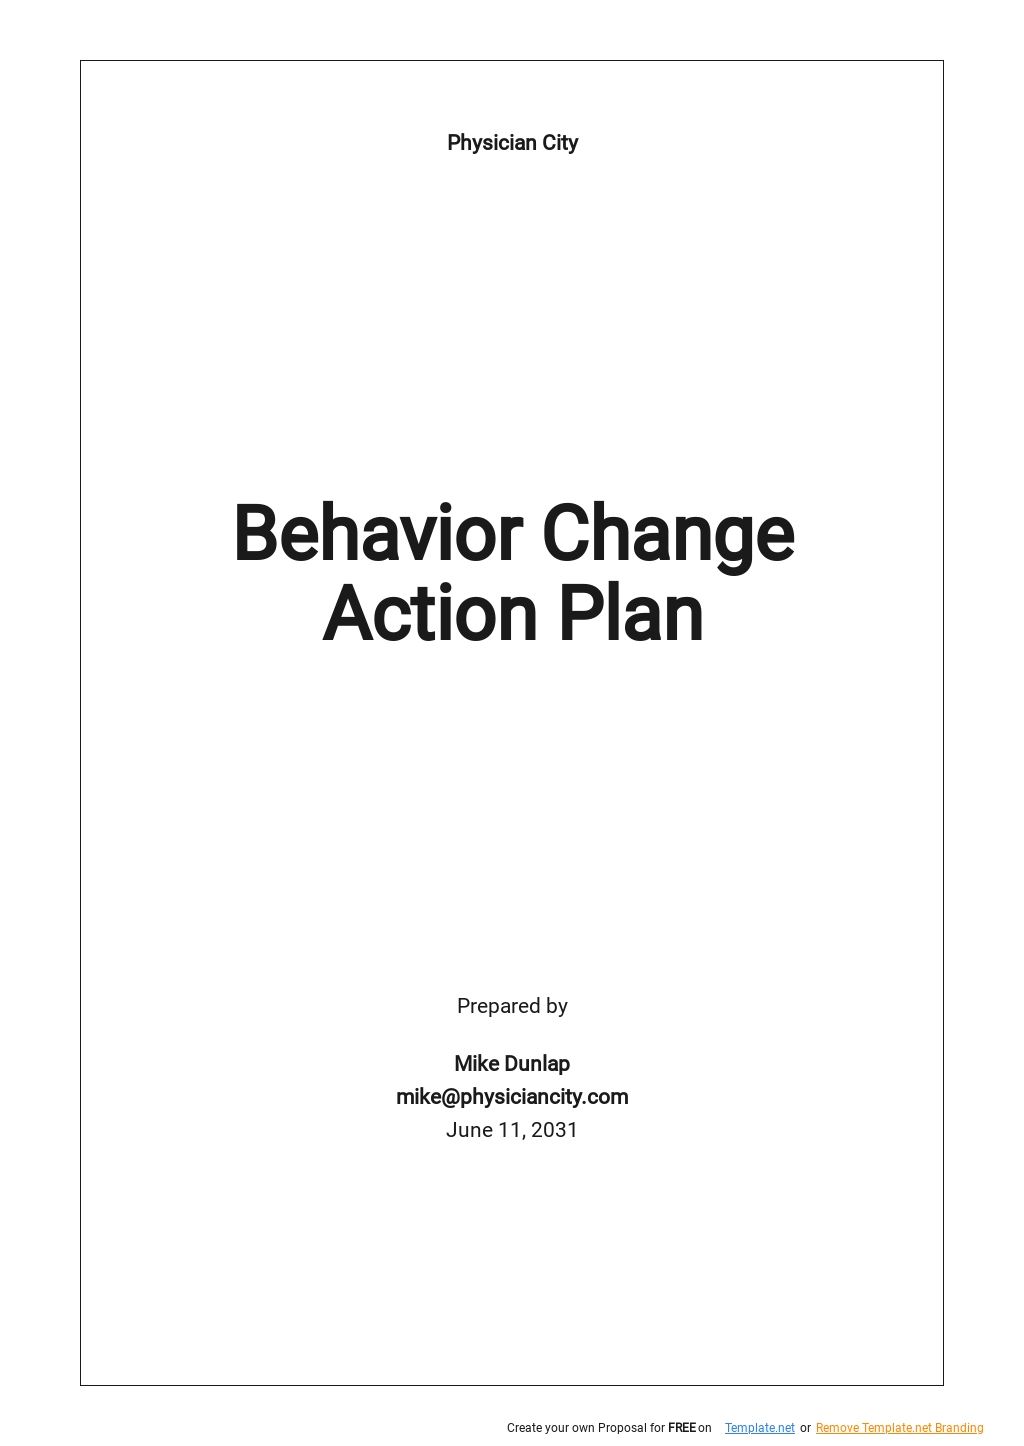 Behavior Change Action Plan Template.jpe